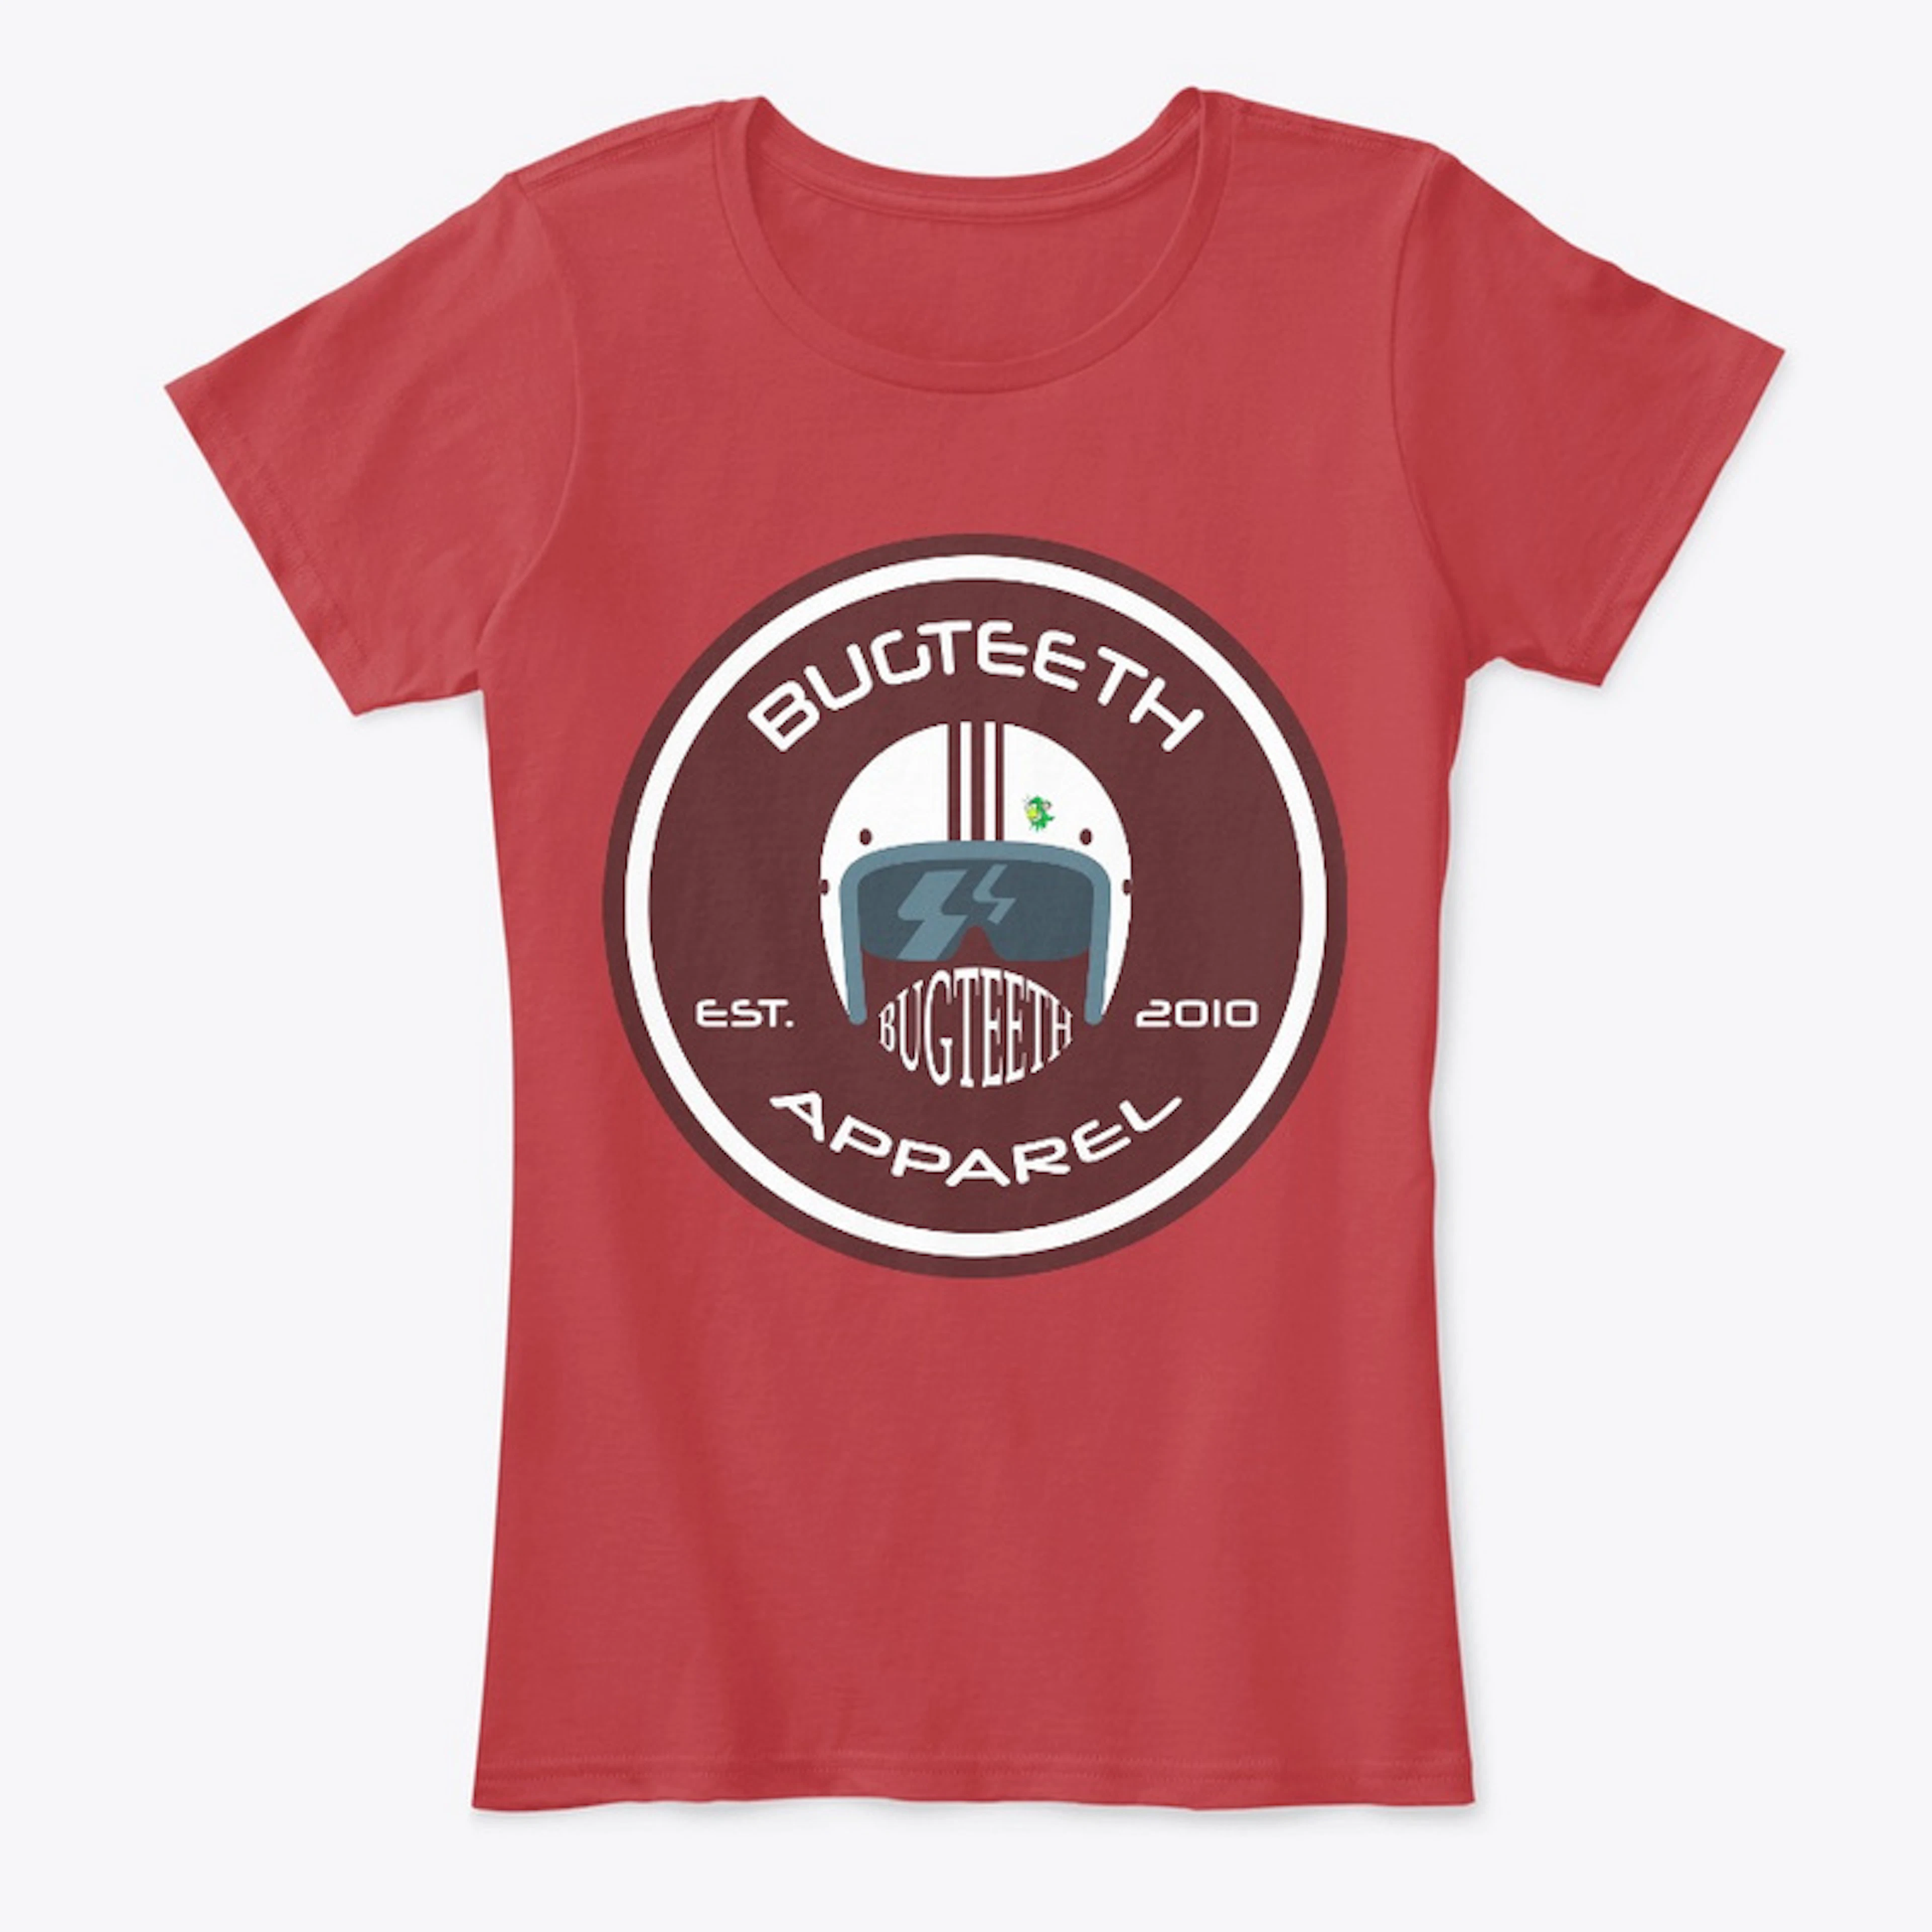 Bugteeth Apparel Logo shirt